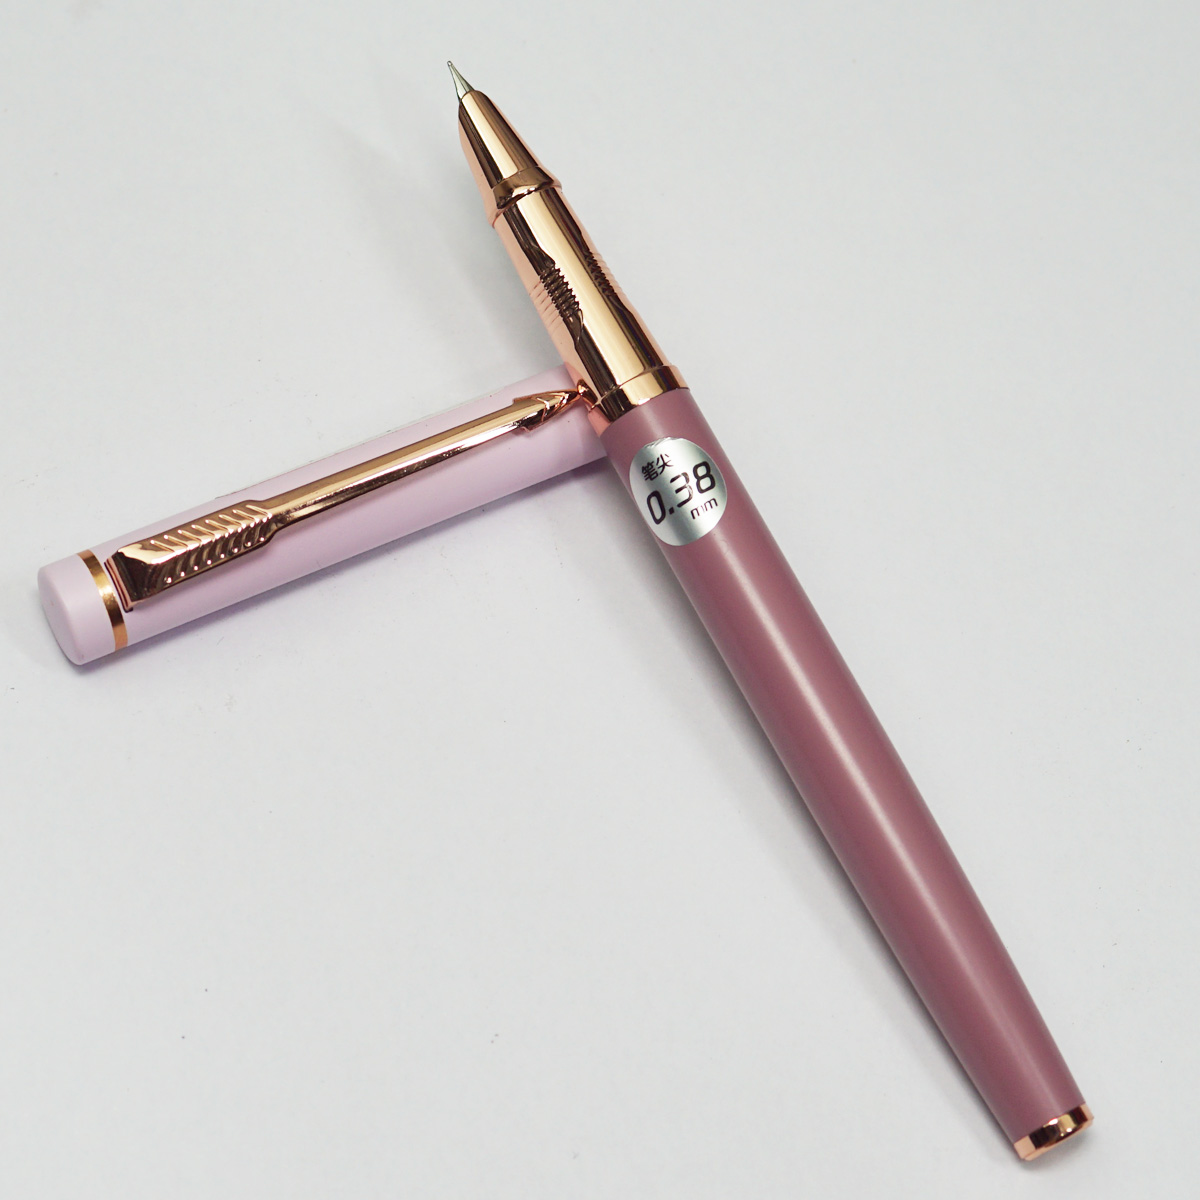 Luoshi Pink Color Body With Copper Clip 0.38mm Fine Nib Converter Type Fountain Pen SKU 22795